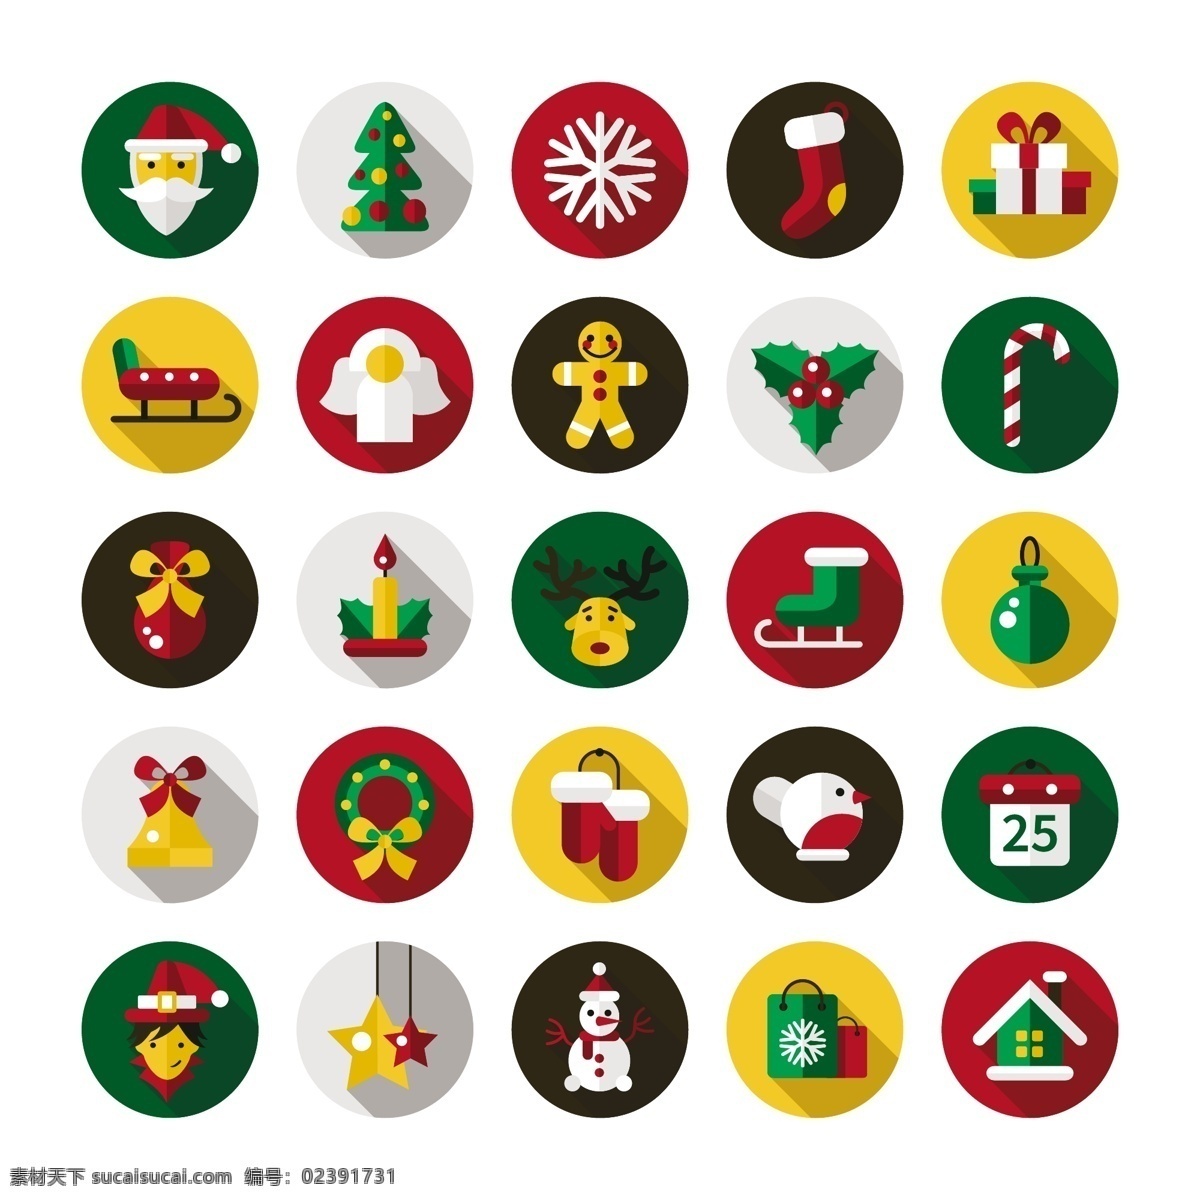 款 圣诞 圆形 icon icon图标 圣诞老人 铃铛 星星 圣诞树 icon下载 驯鹿 雪橇